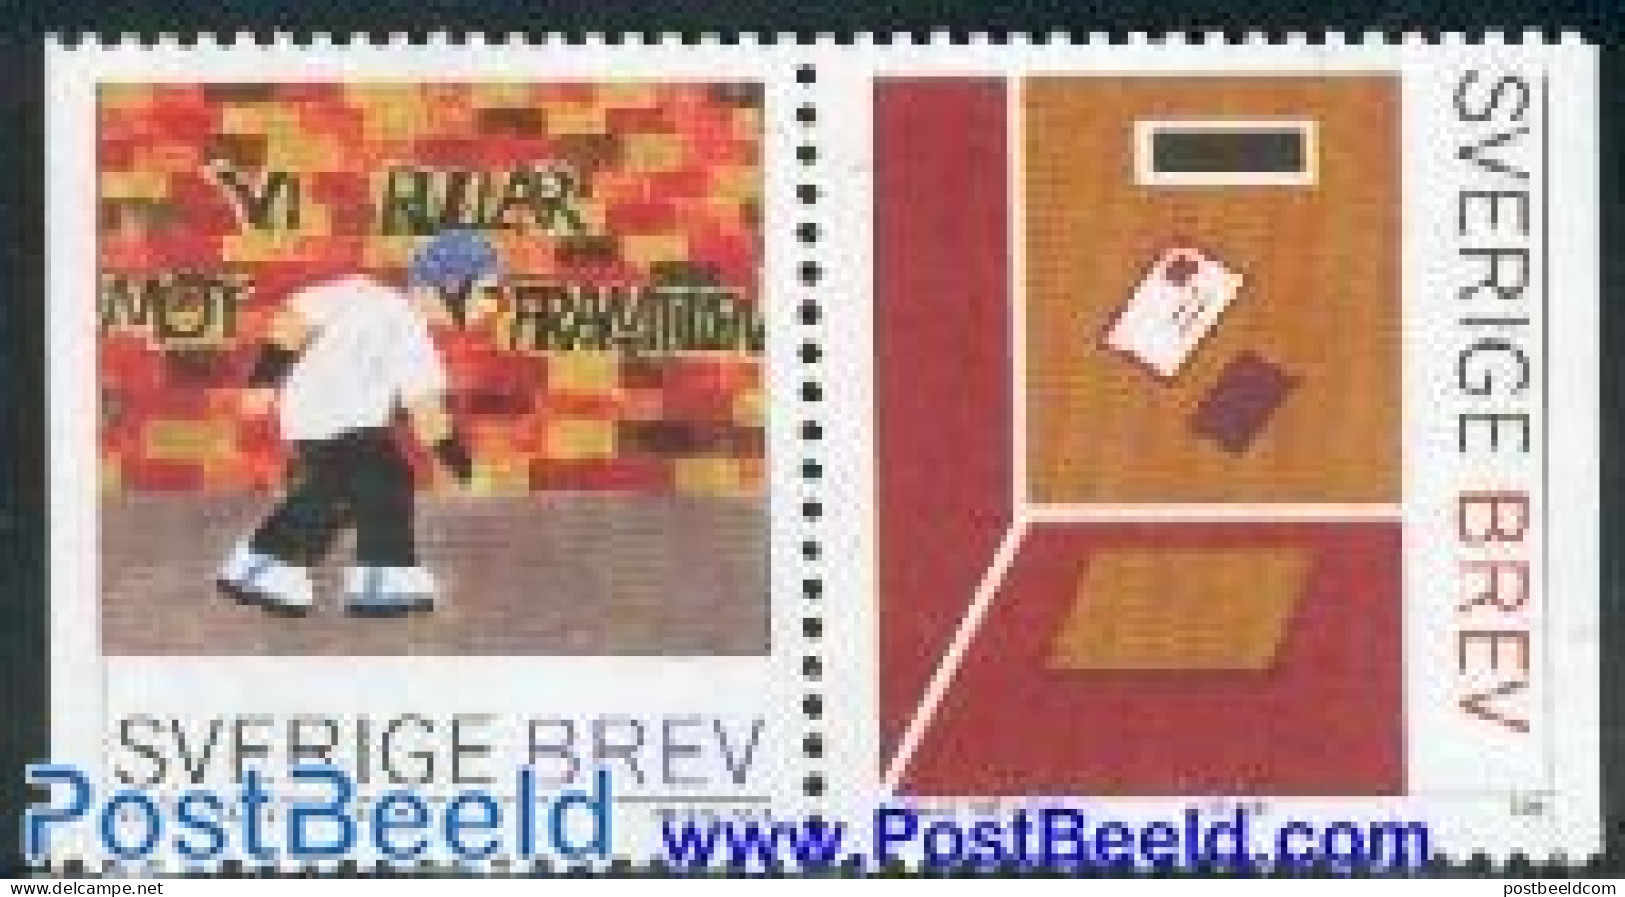 Sweden 2001 Stamp Design Contest 2v [:], Mint NH, Sport - Fun Sports - Post - Unused Stamps